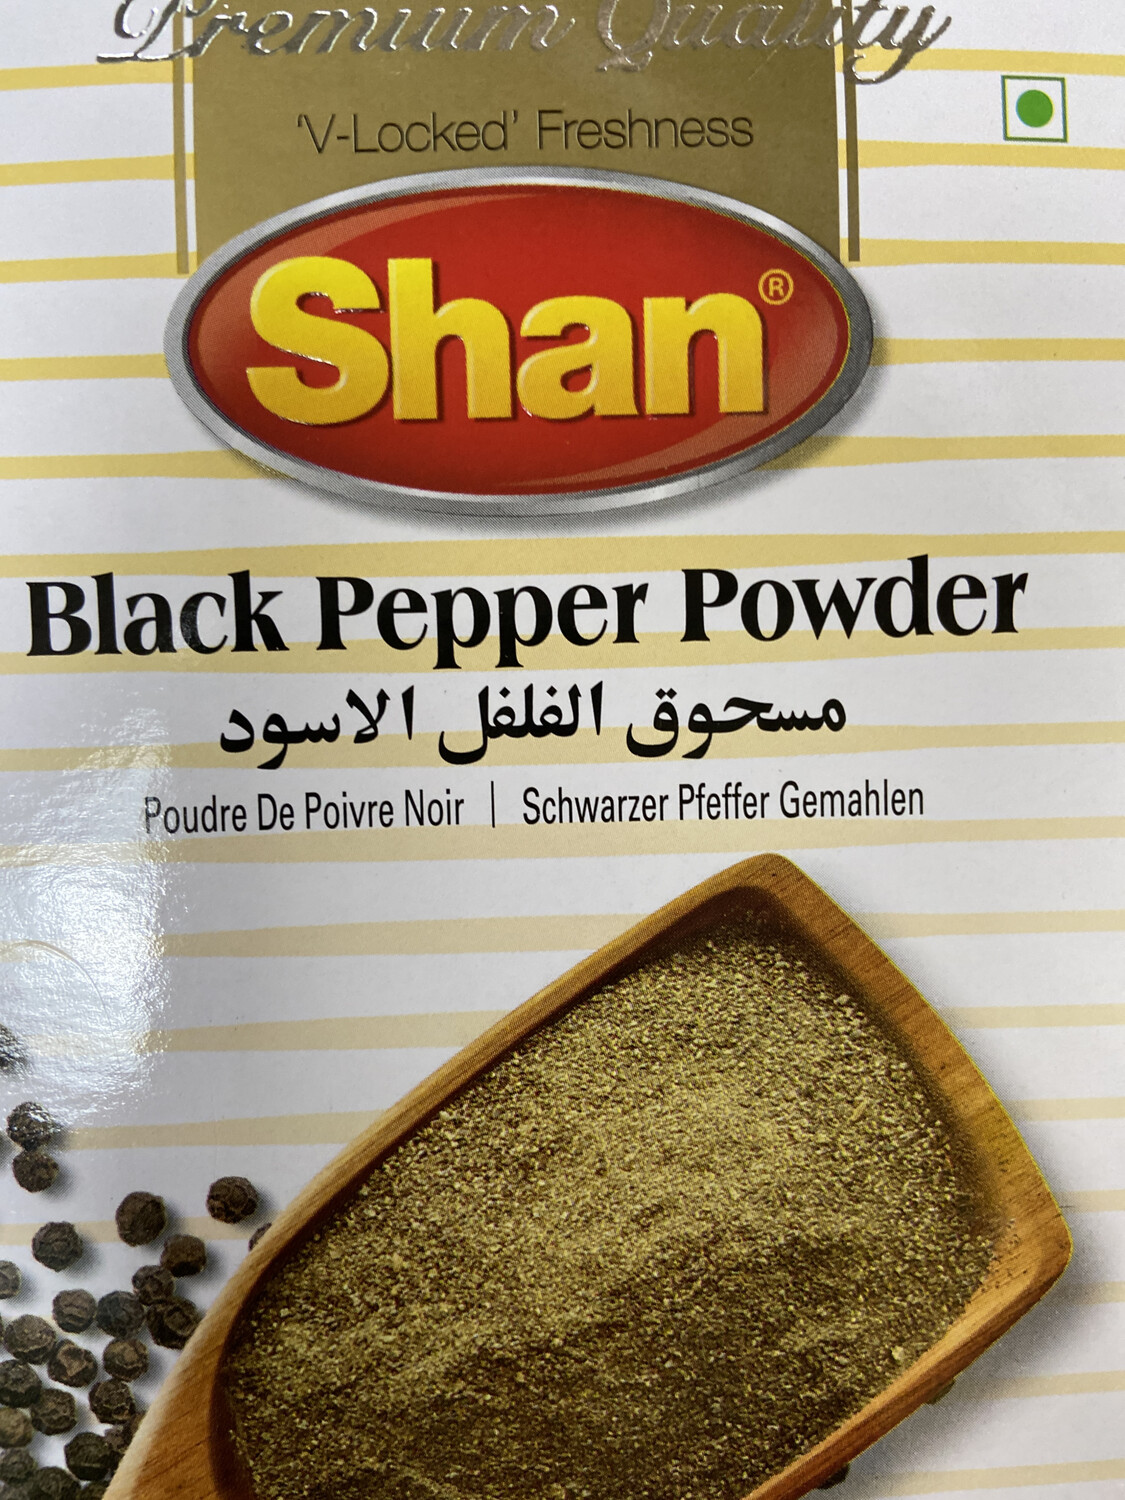 Shan Black Pepper Powder 100g